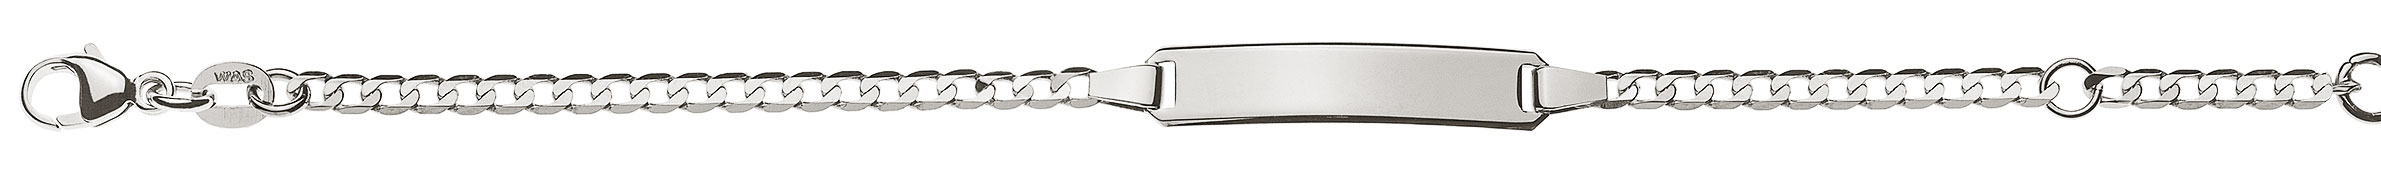 AURONOS Prestige ID bracelet 18k white gold diamond-plated curb chain 14cm